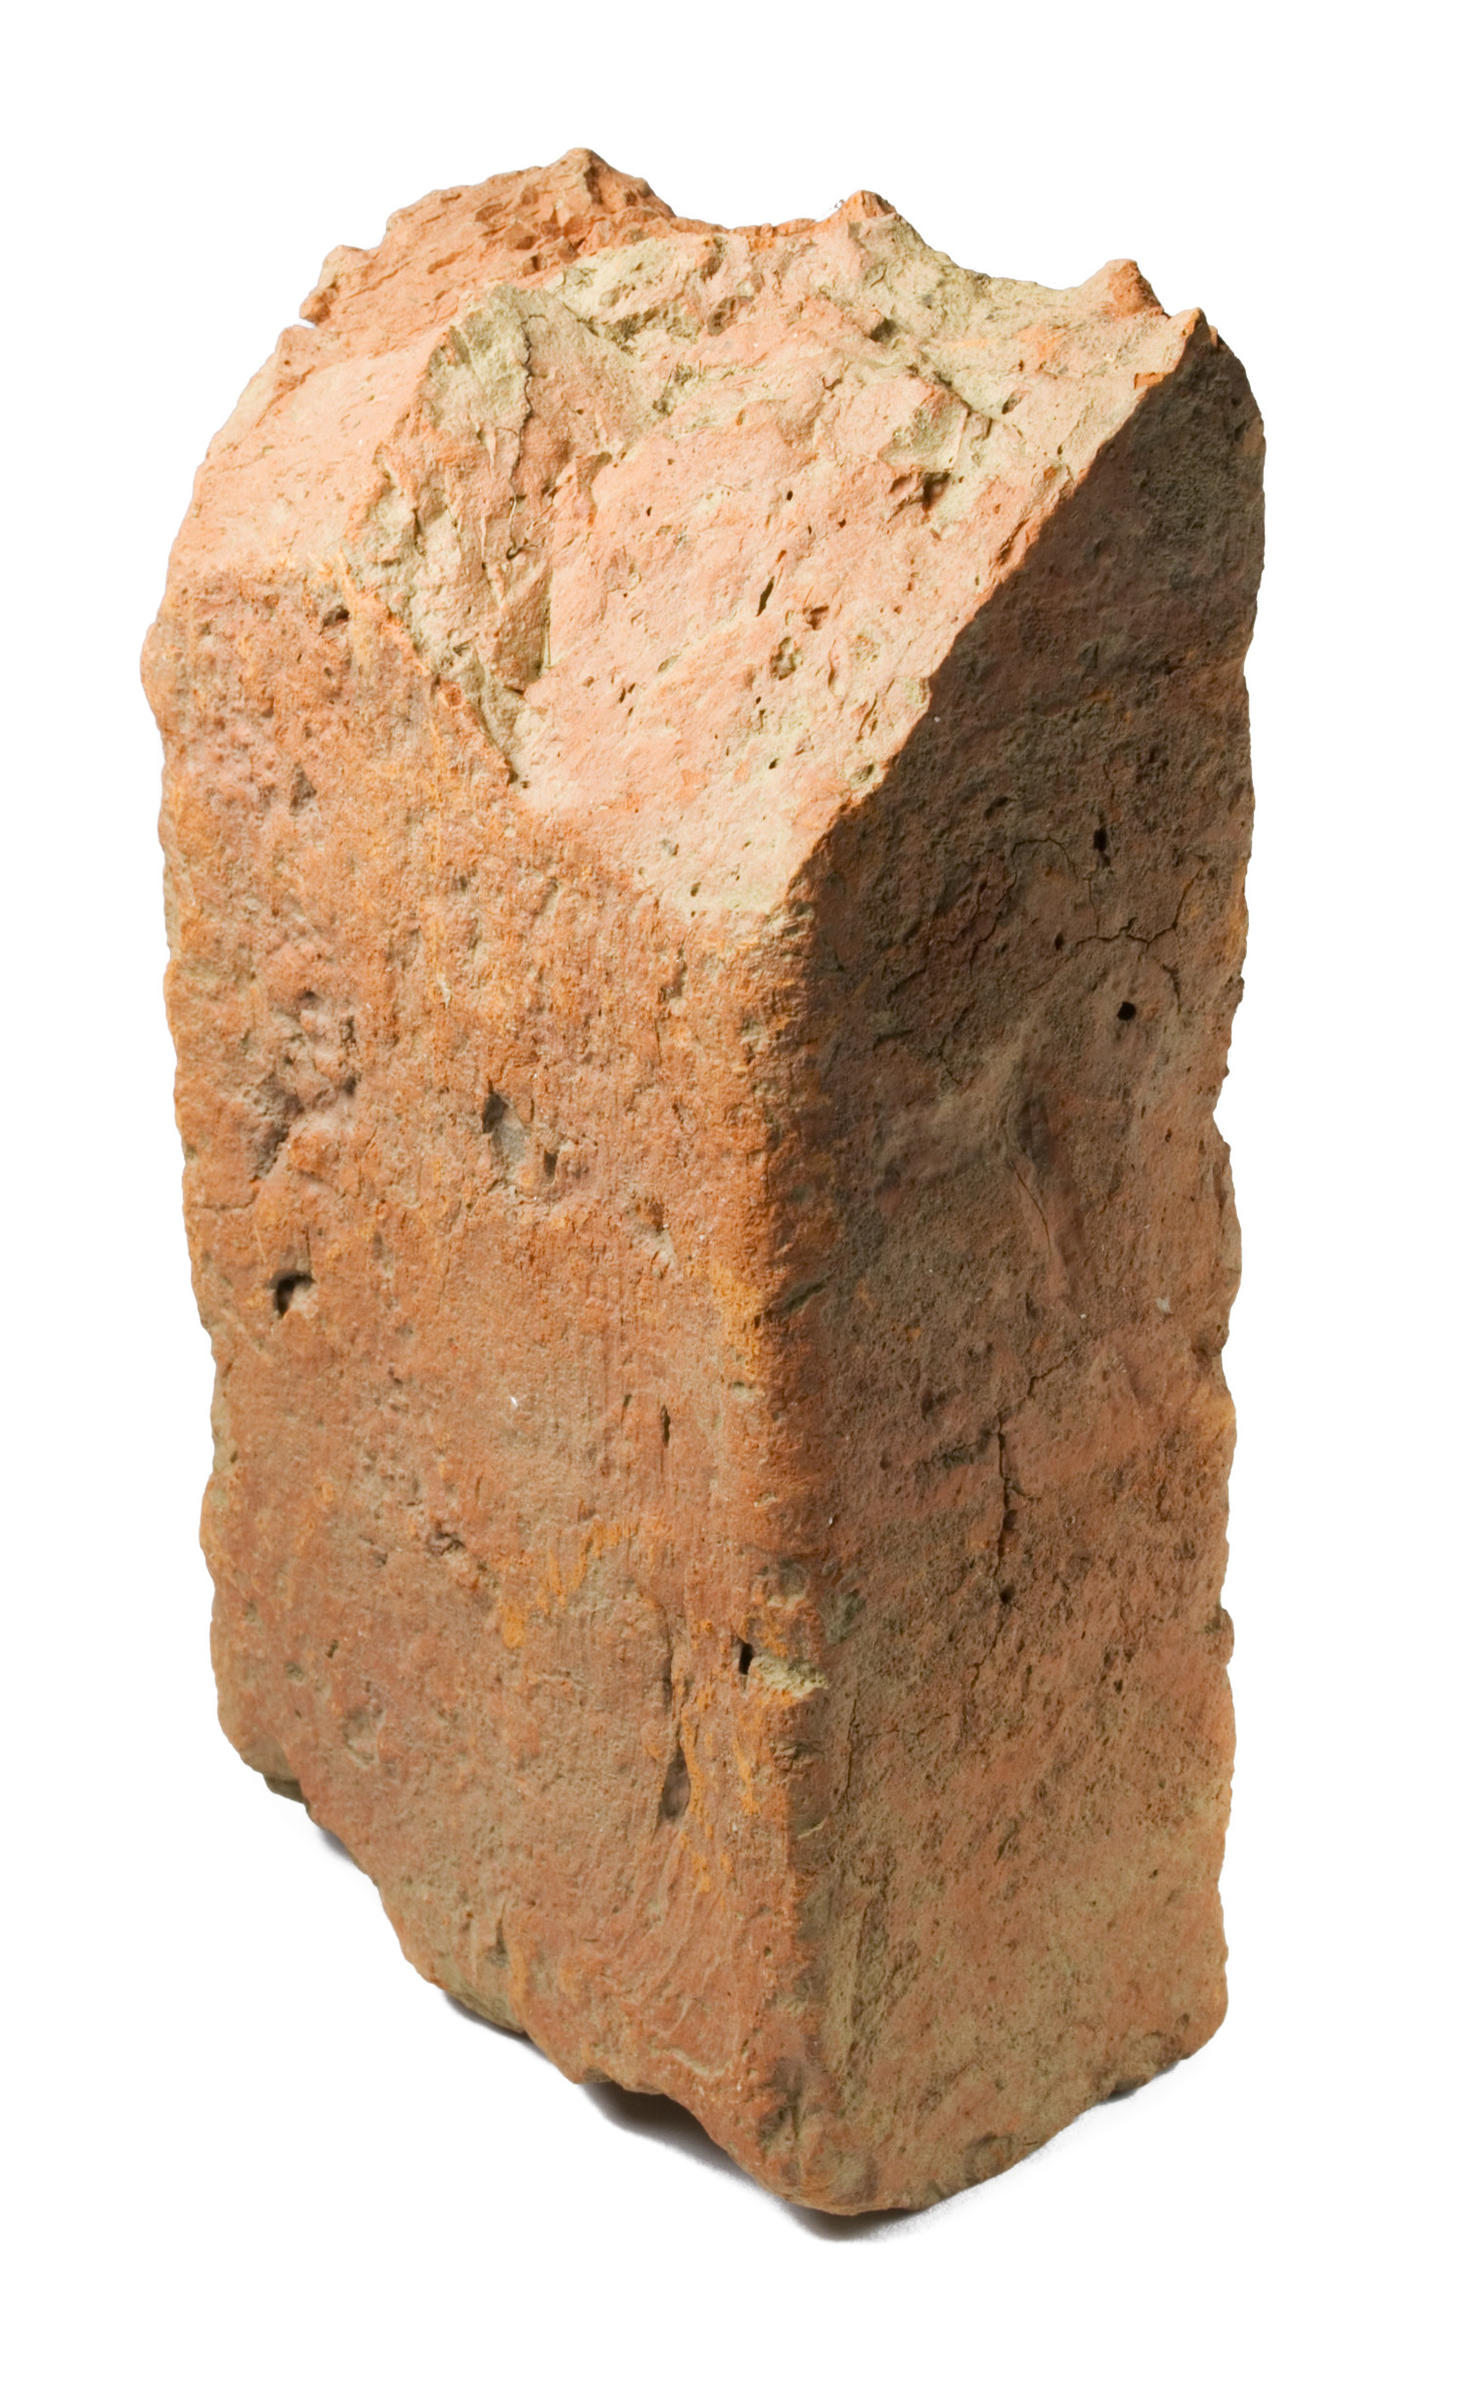 a brick from the powderhouse on powderhouse hill on Boston Common